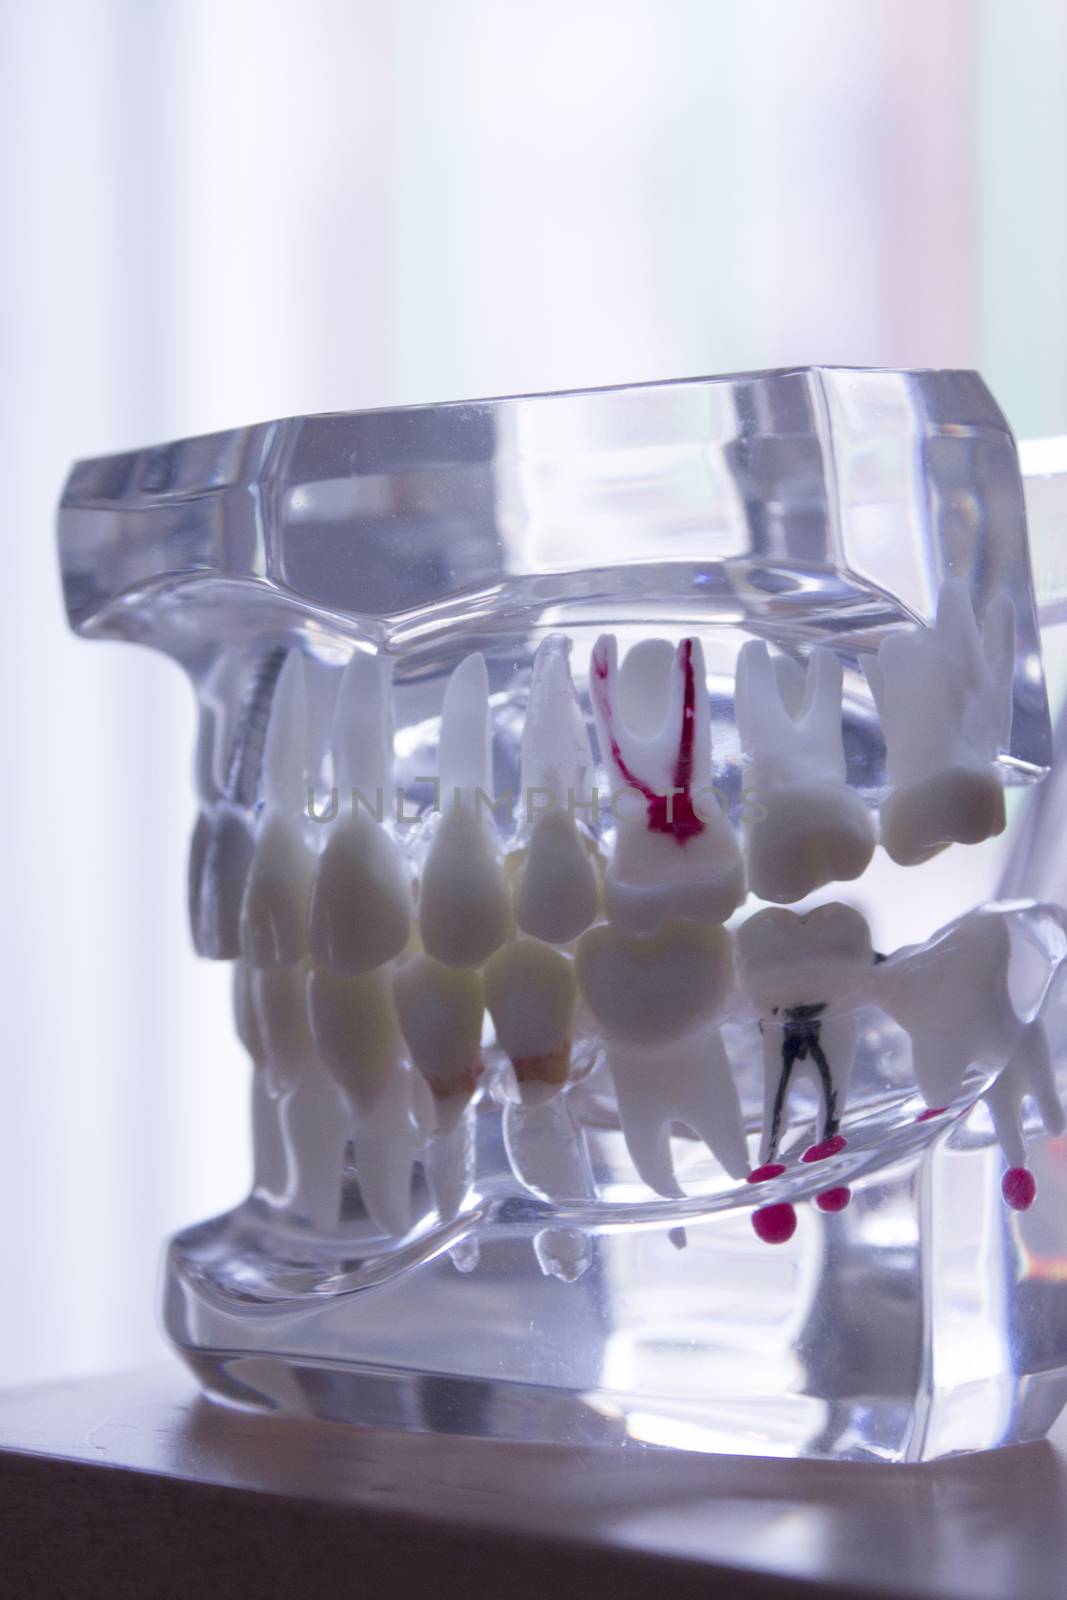 False teeth sample for dentists